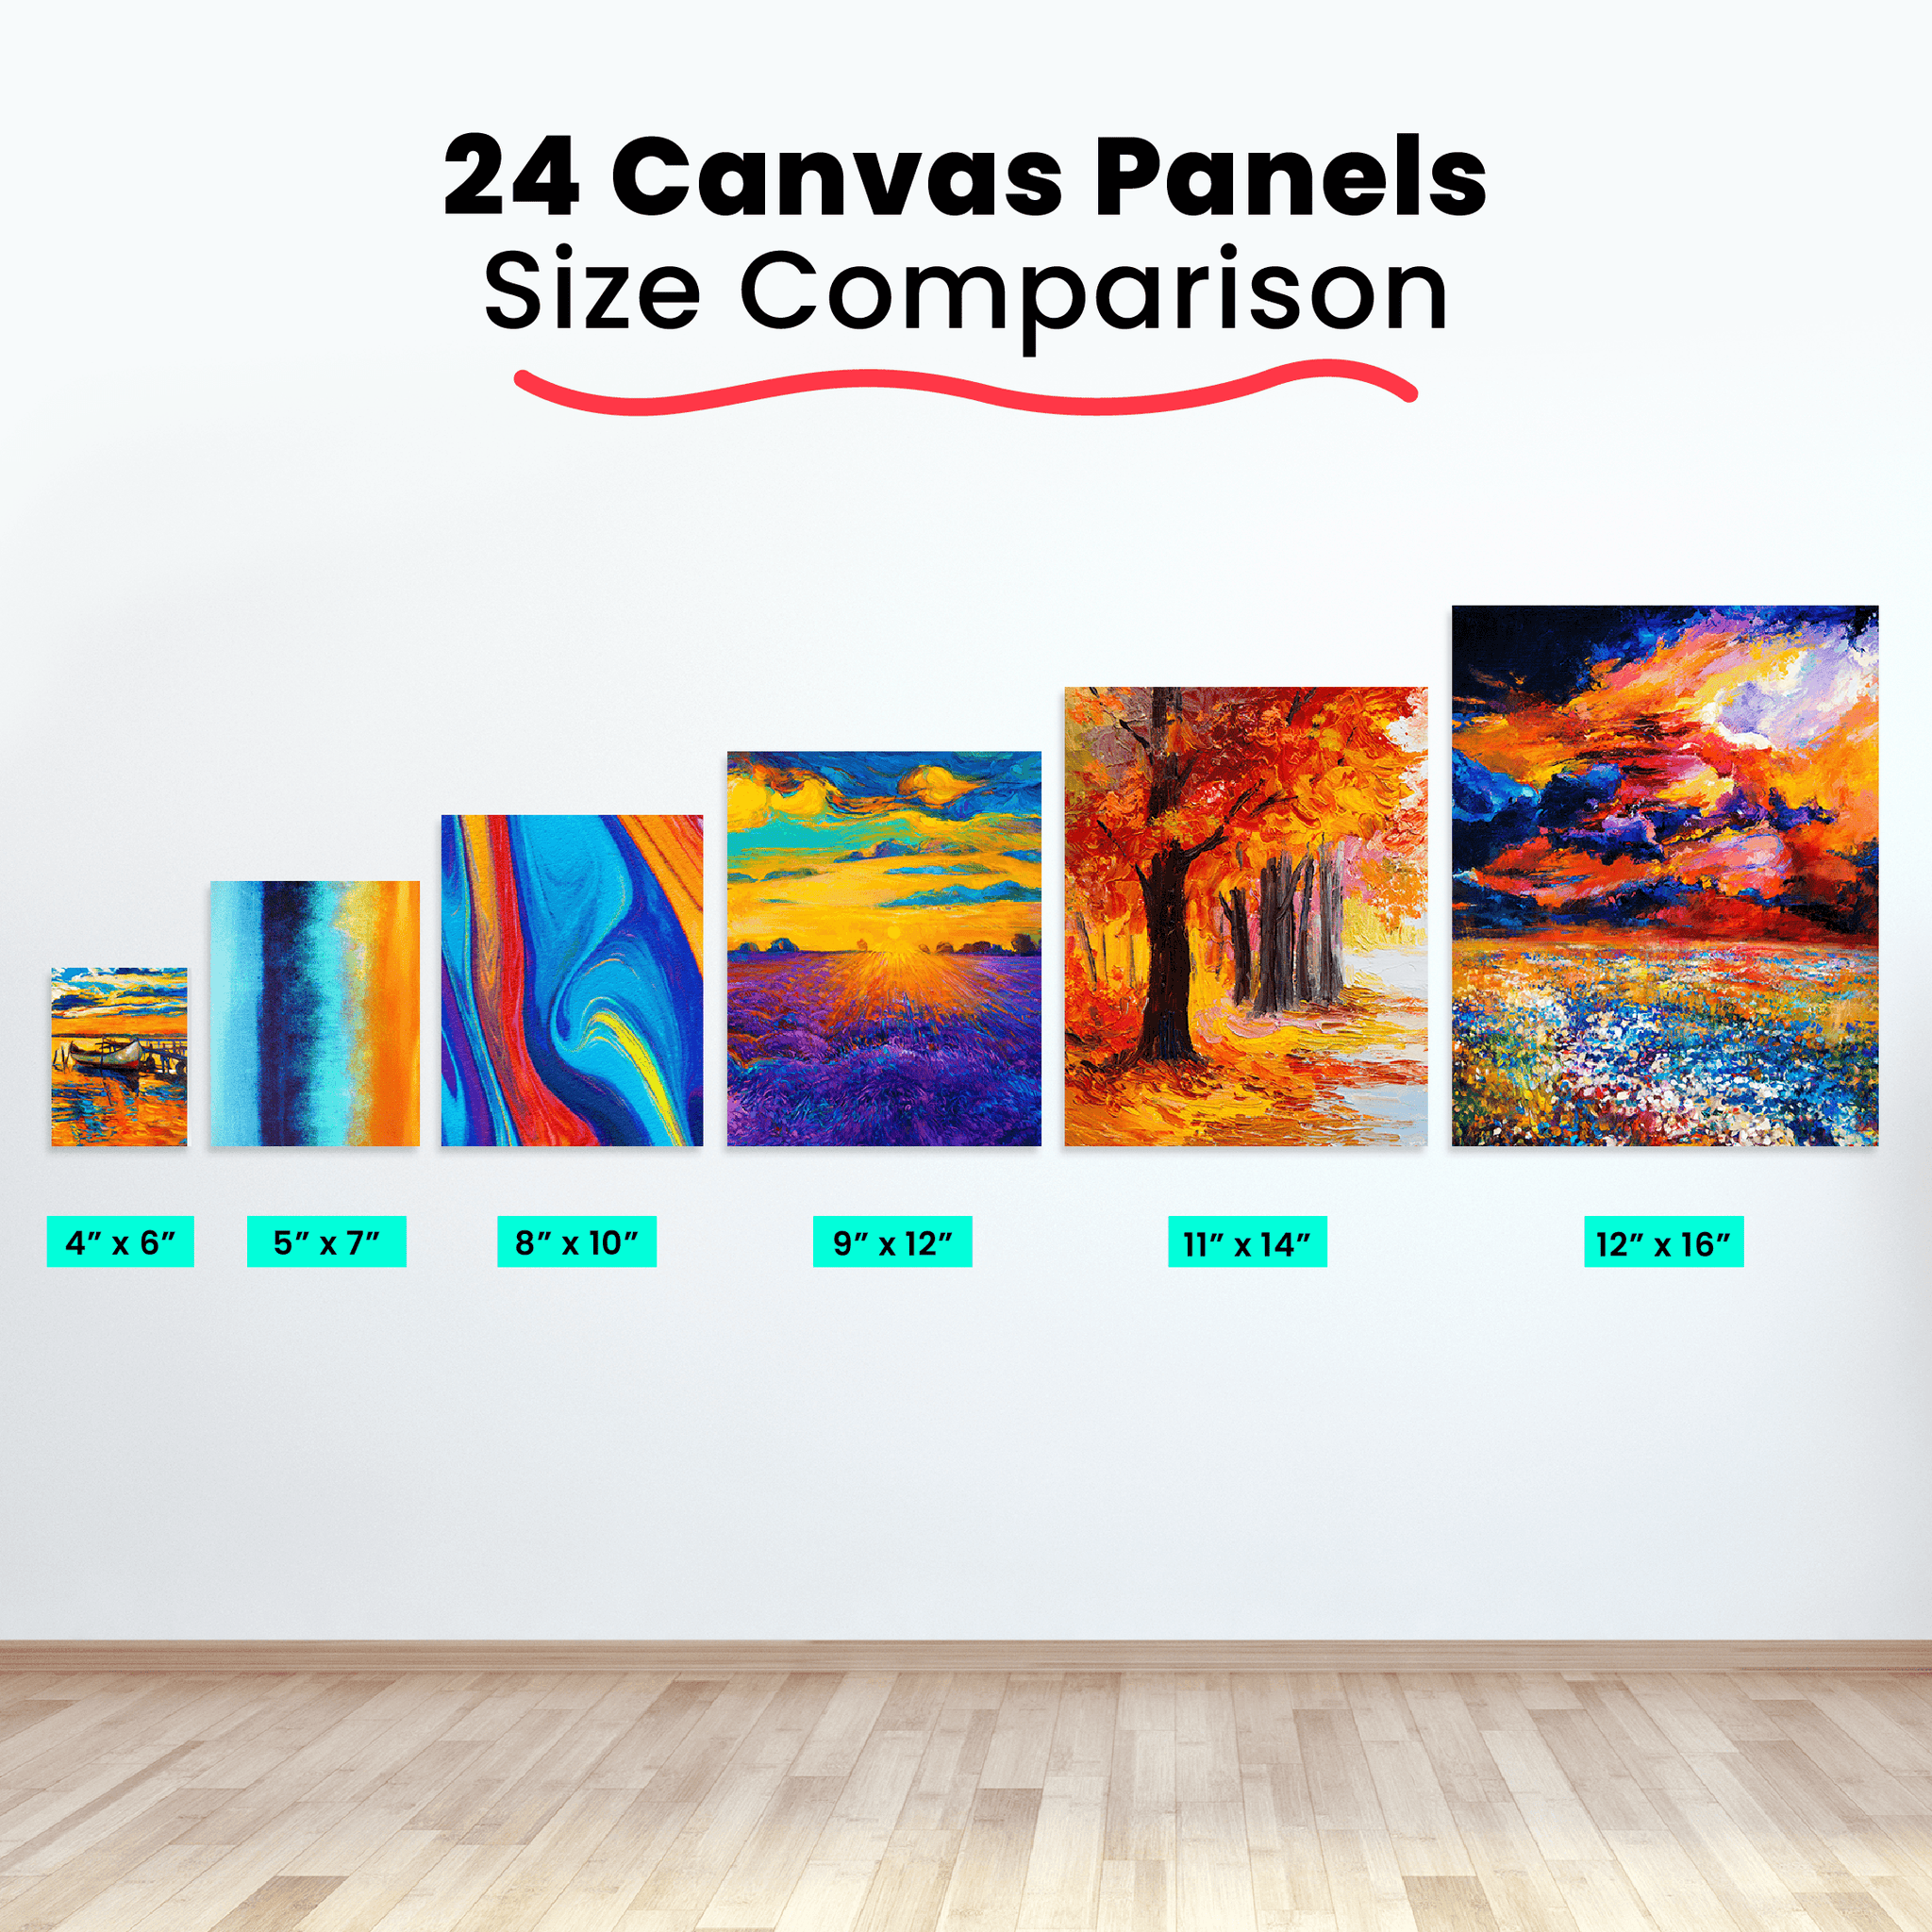 9 x 12 Canvas Panels - 12 Pack